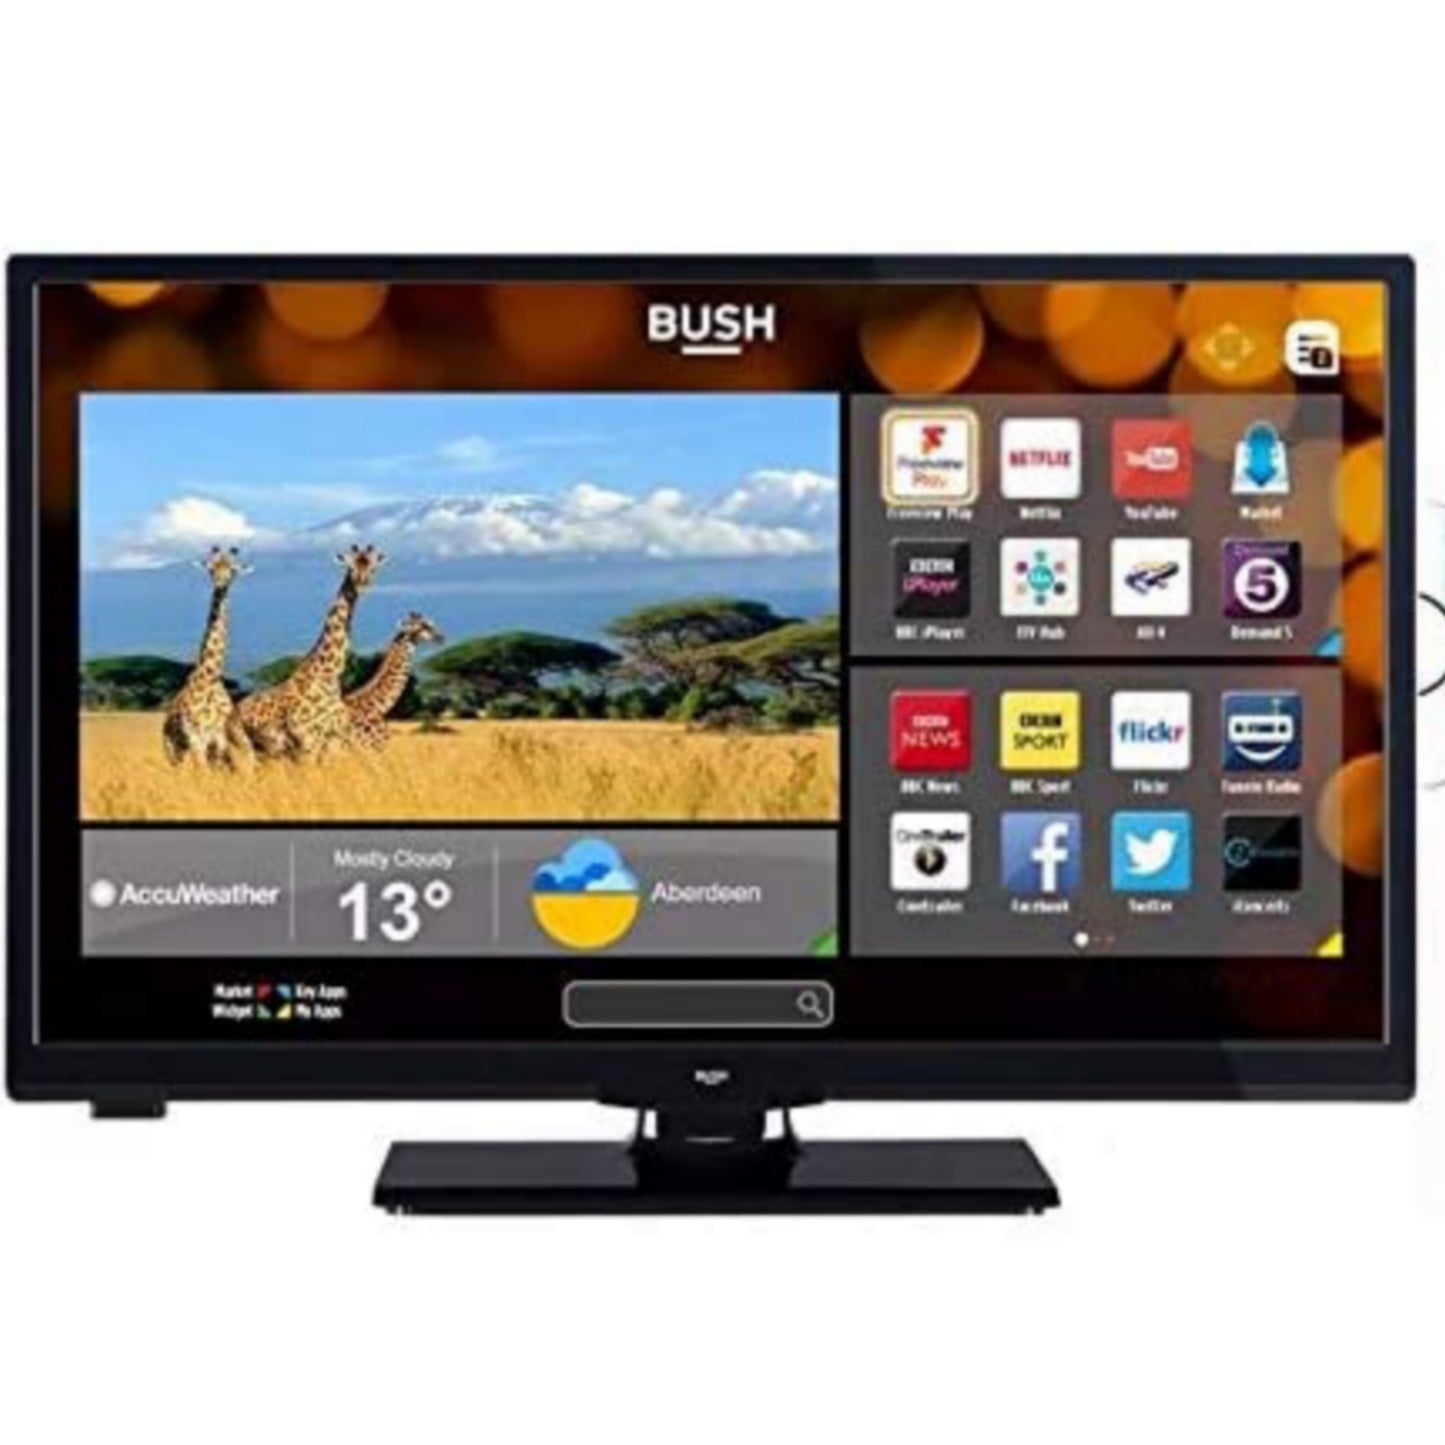 BUSH 24 Inch Smart Full HD LED TV - London Used